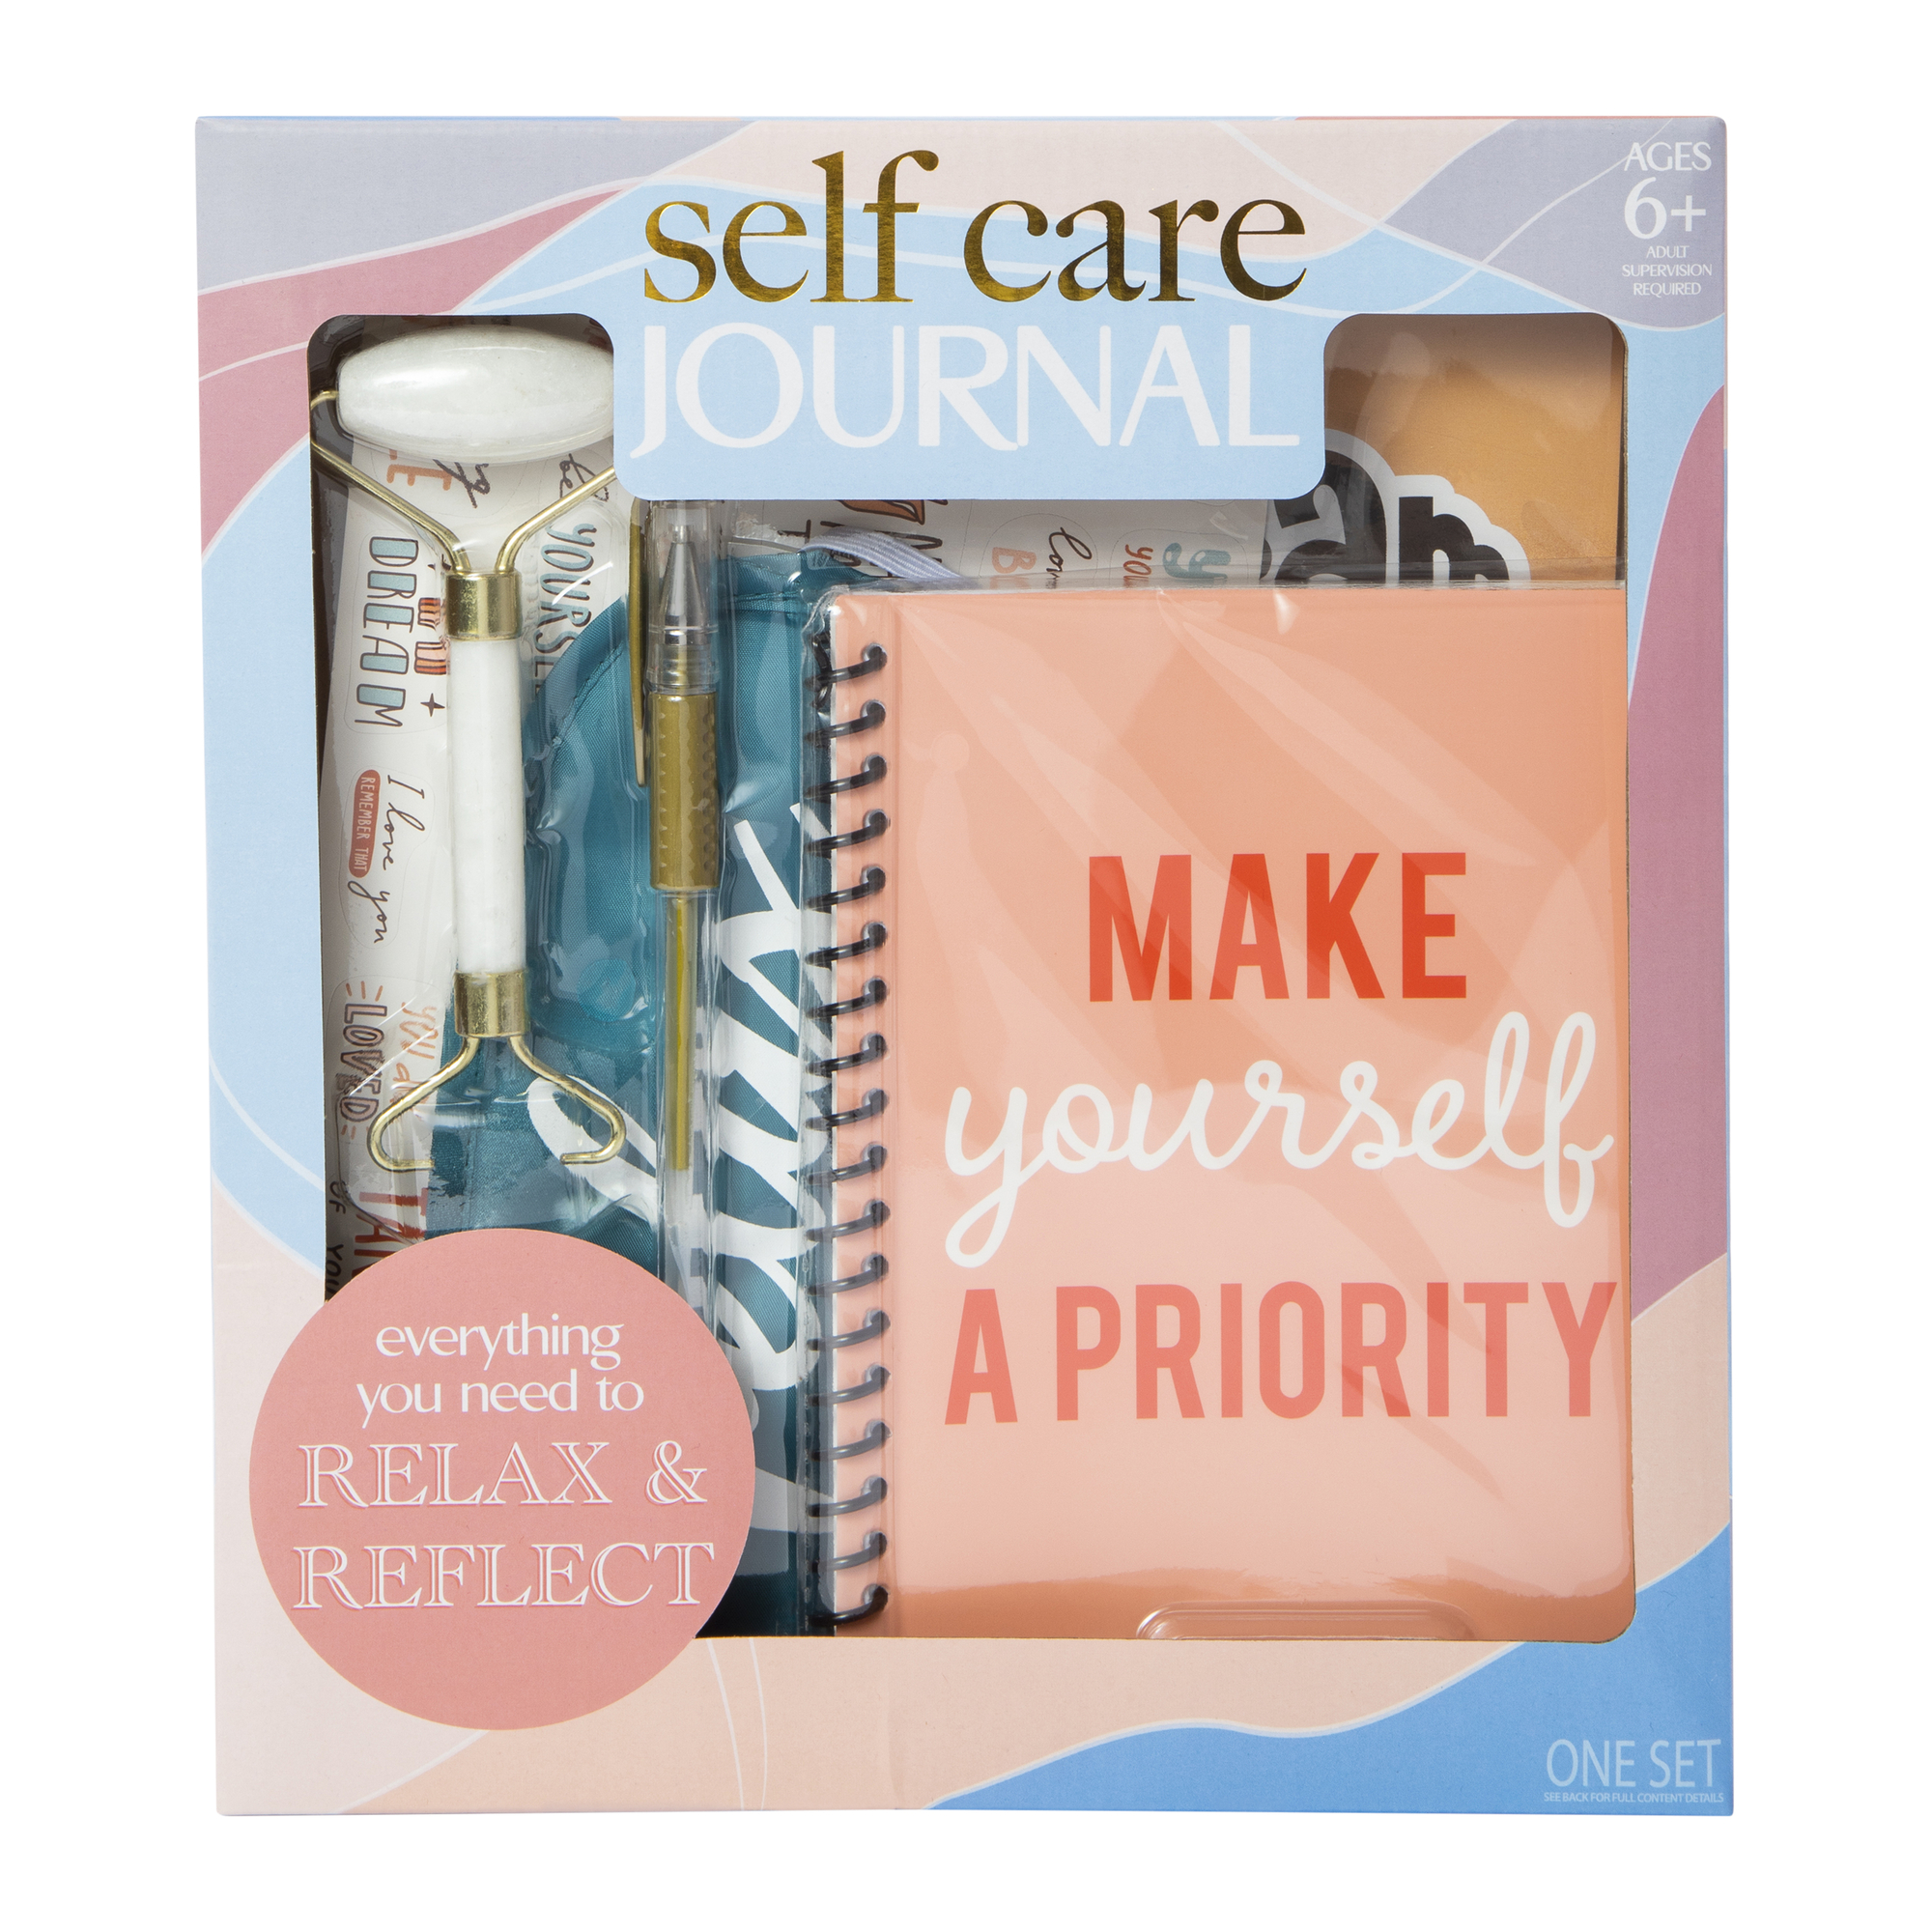 self-care journal gift set